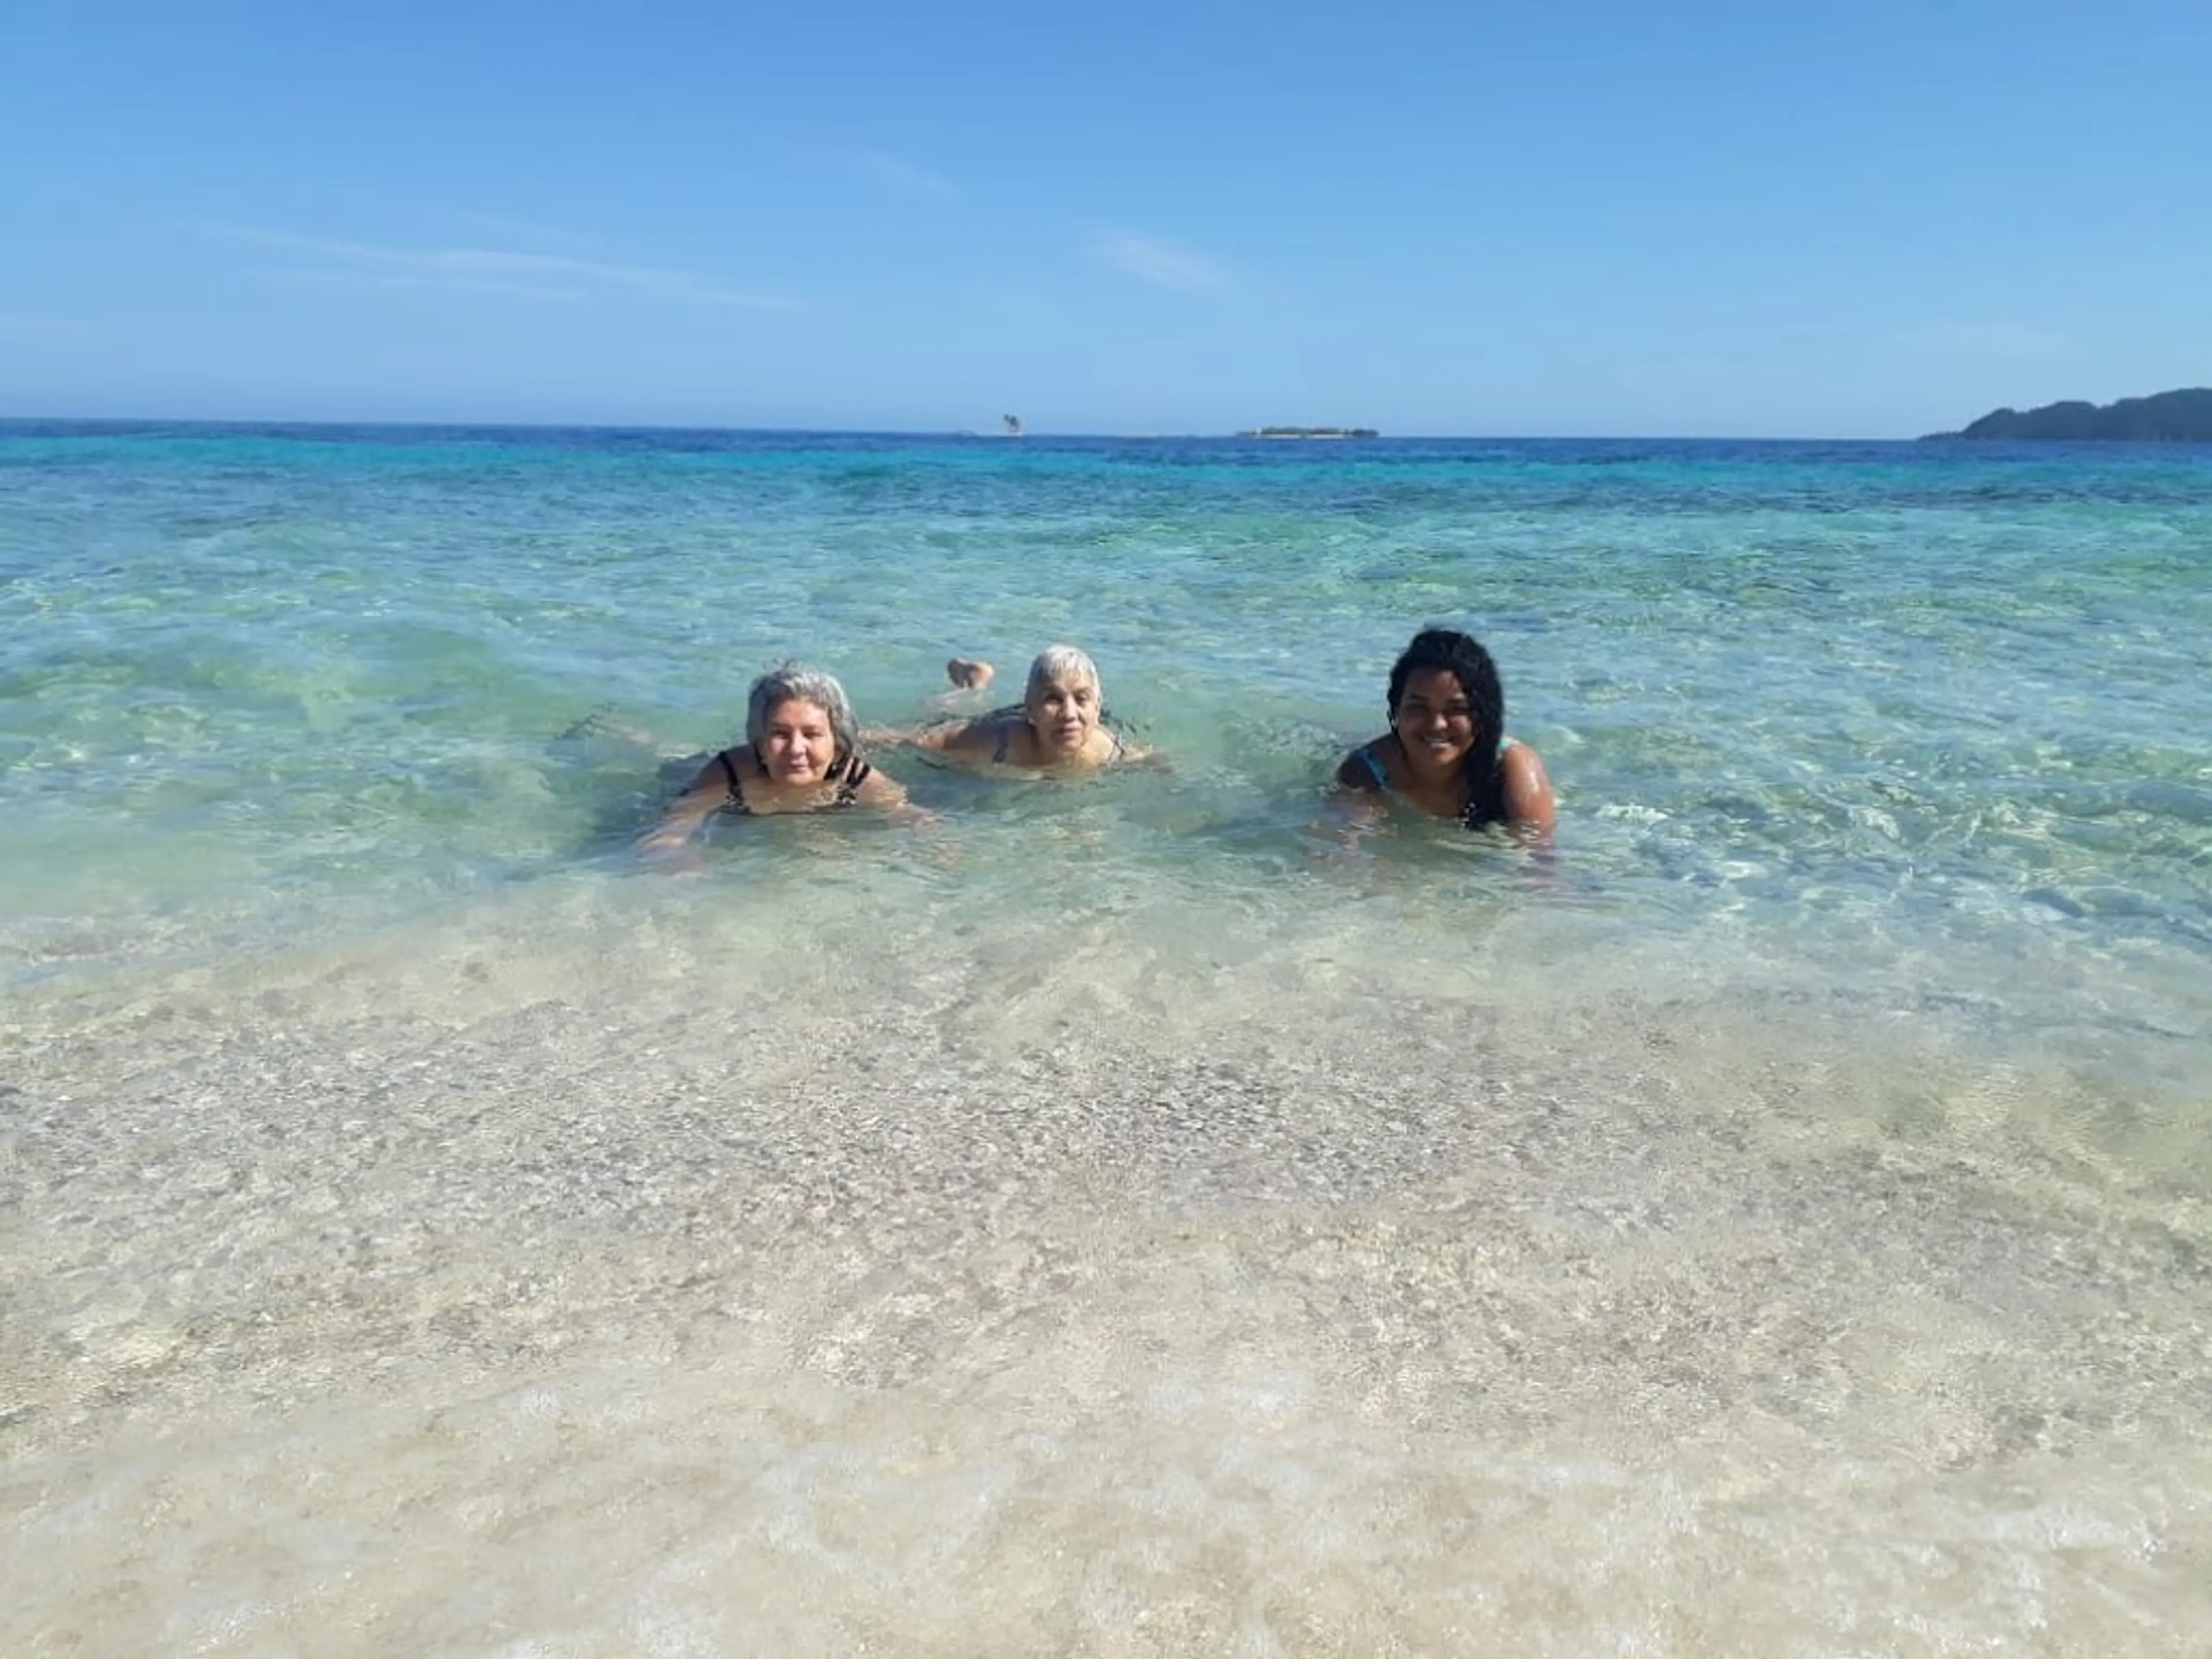 Swimming in the Caribbean Sea